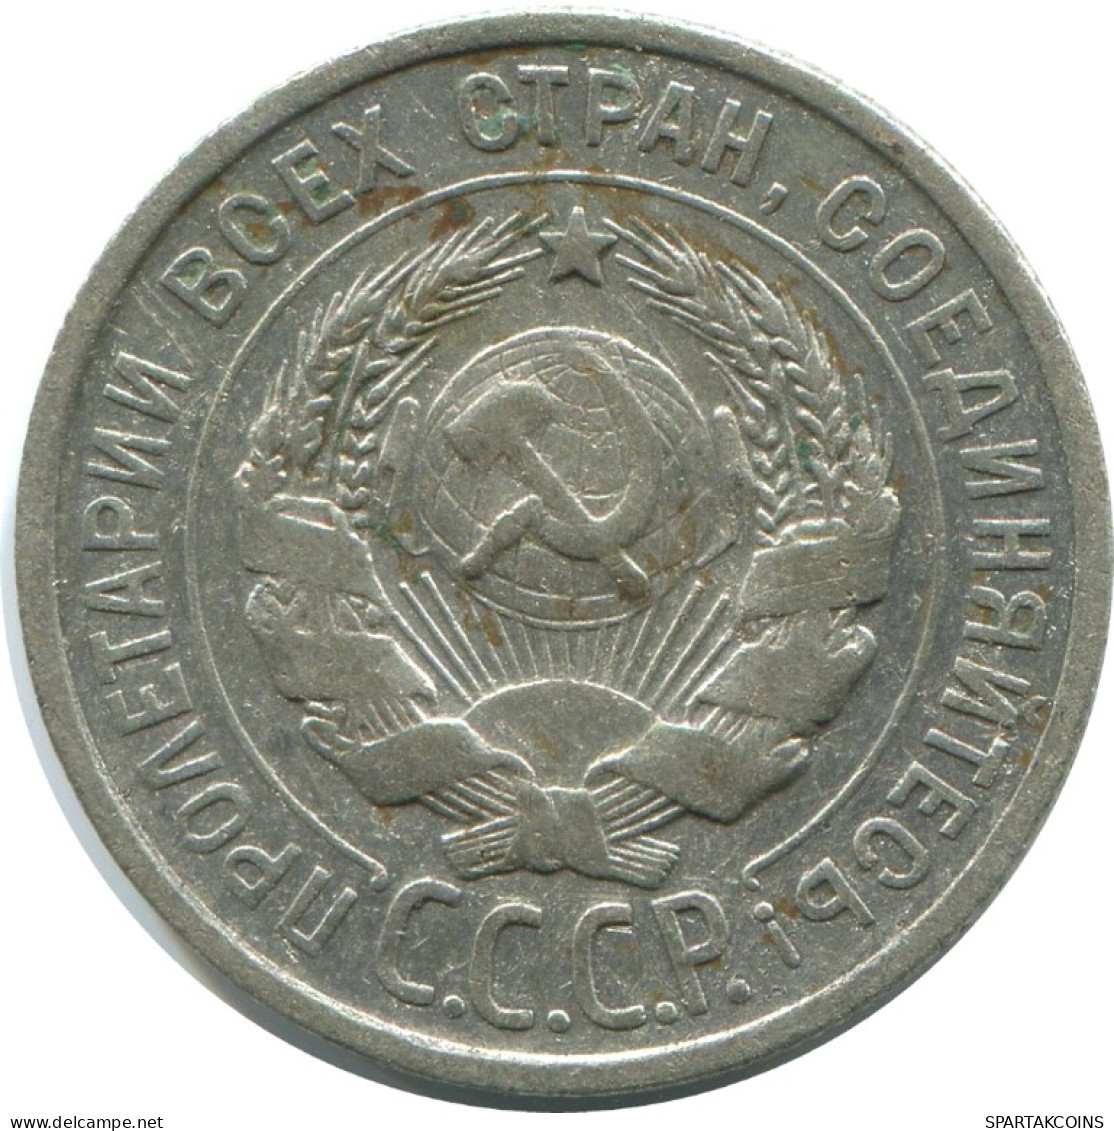 20 KOPEKS 1924 RUSIA RUSSIA USSR PLATA Moneda HIGH GRADE #AF301.4.E.A - Rusia